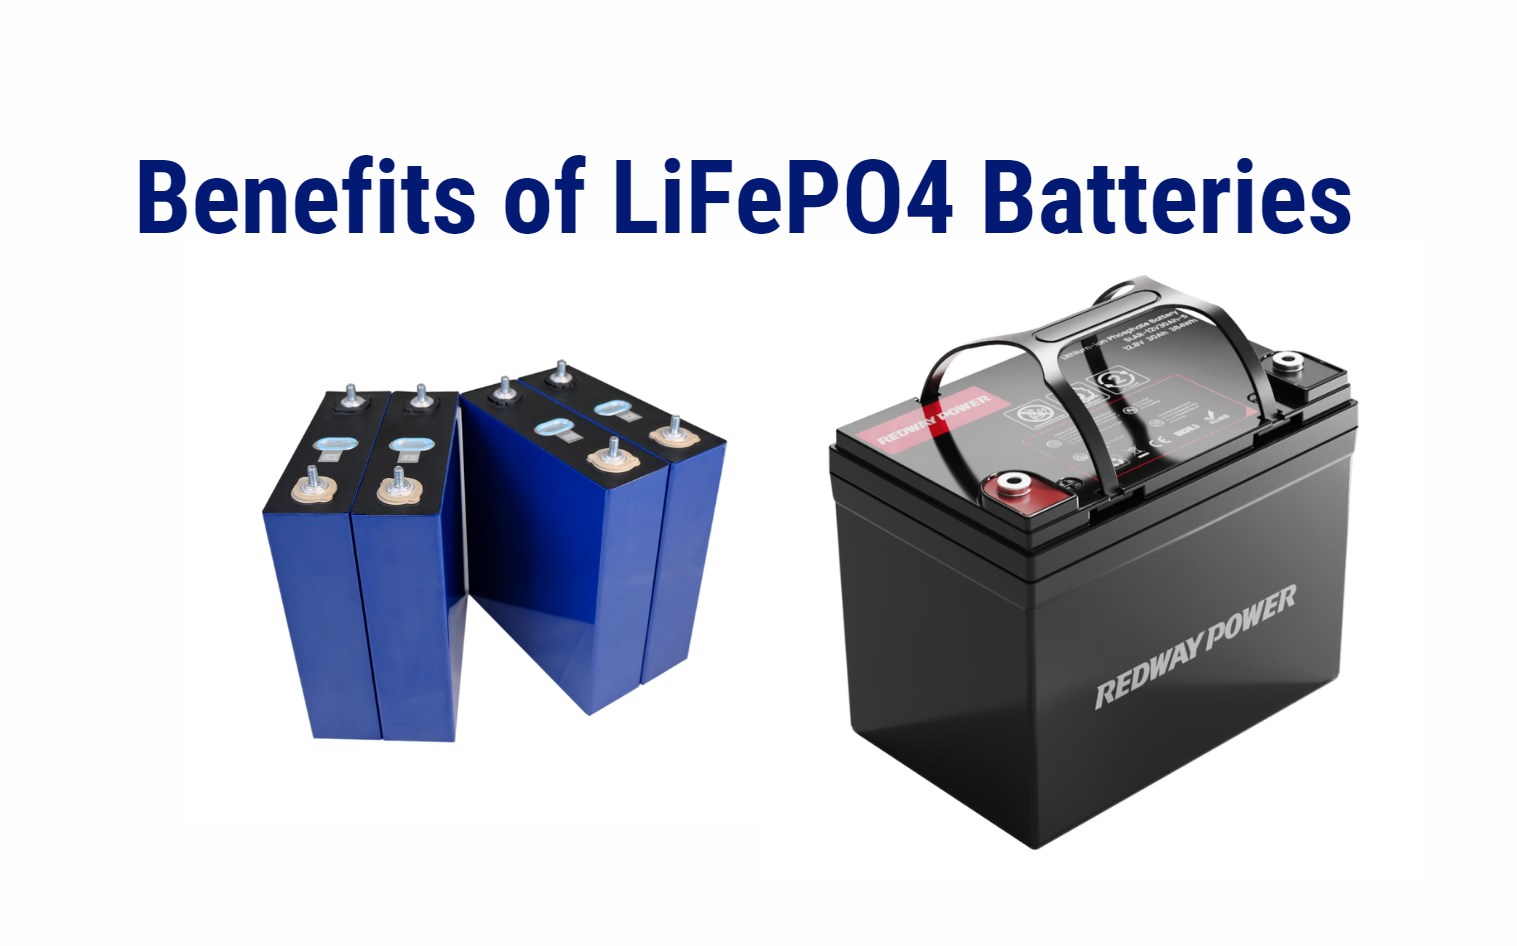 Benefits of LiFePO4 Batteries